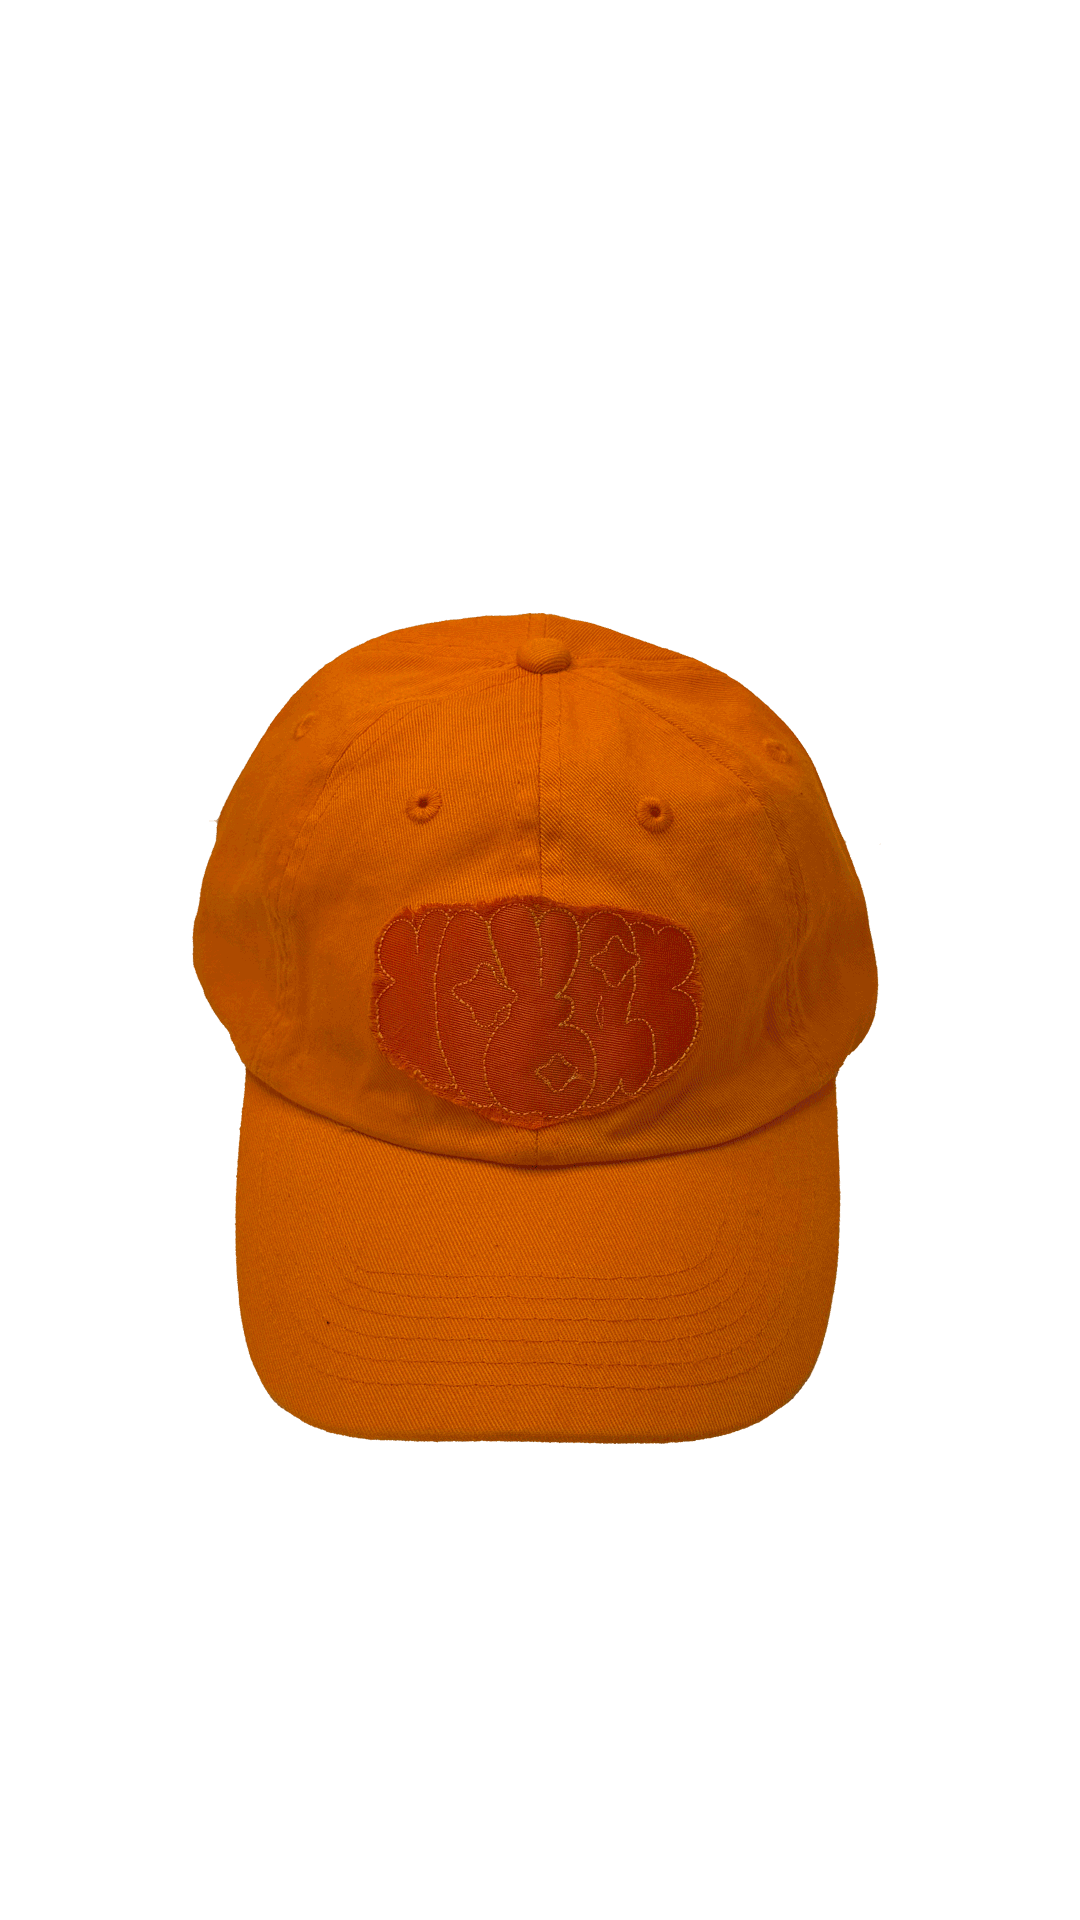 KIRBEE TWILL COTTON HAT - ORANGE